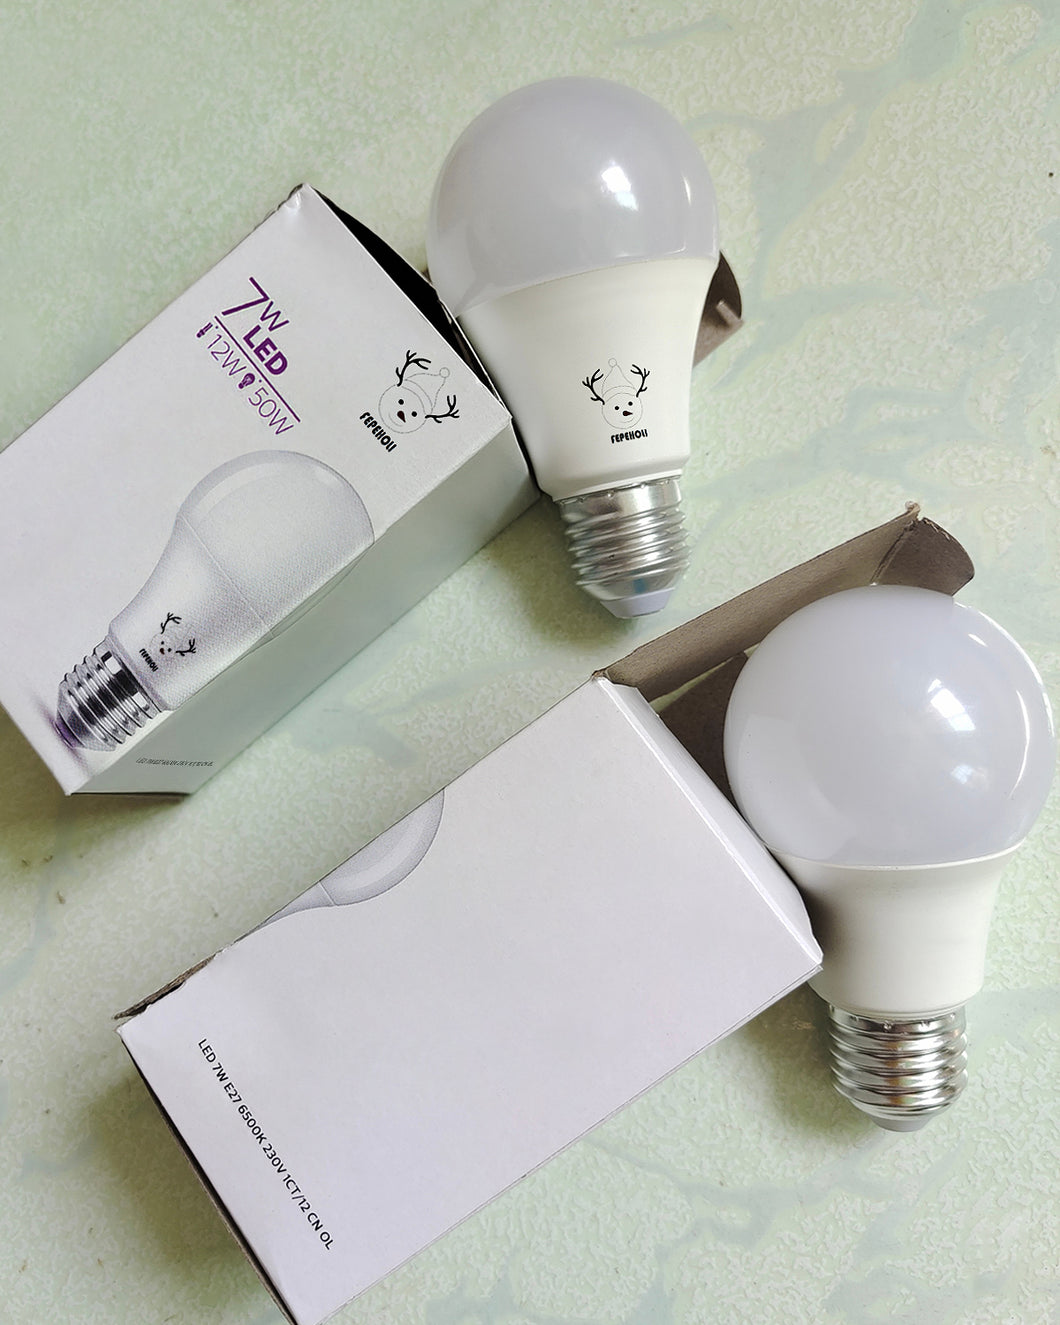 FEPEHOLI Light Bulb, 7W LED Bulbs Daylight White E27 Standard Base LED Bulb, UL Listed